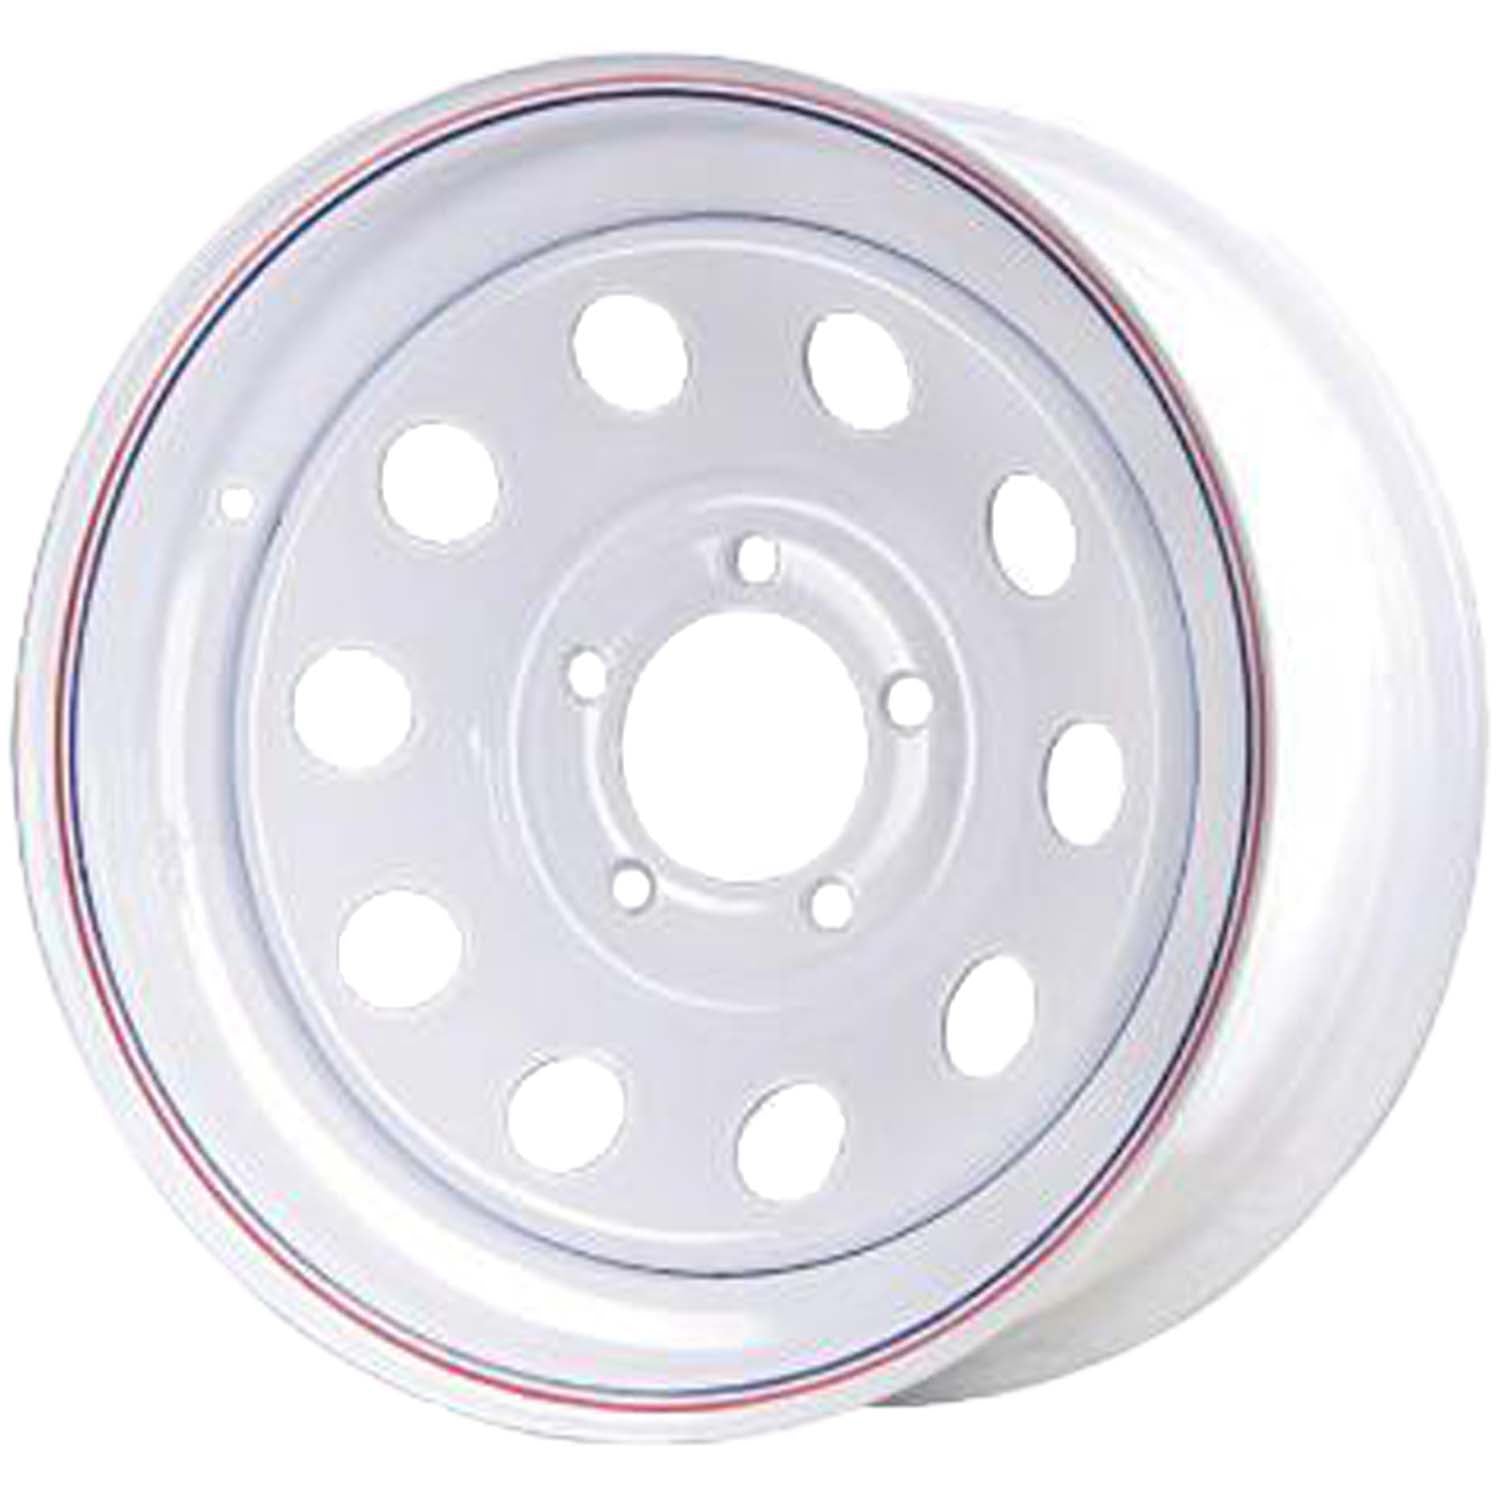 Carlisle 14x6 5 on 4.5 Modular Steel Trailer Wheel - White with Pin Stripes